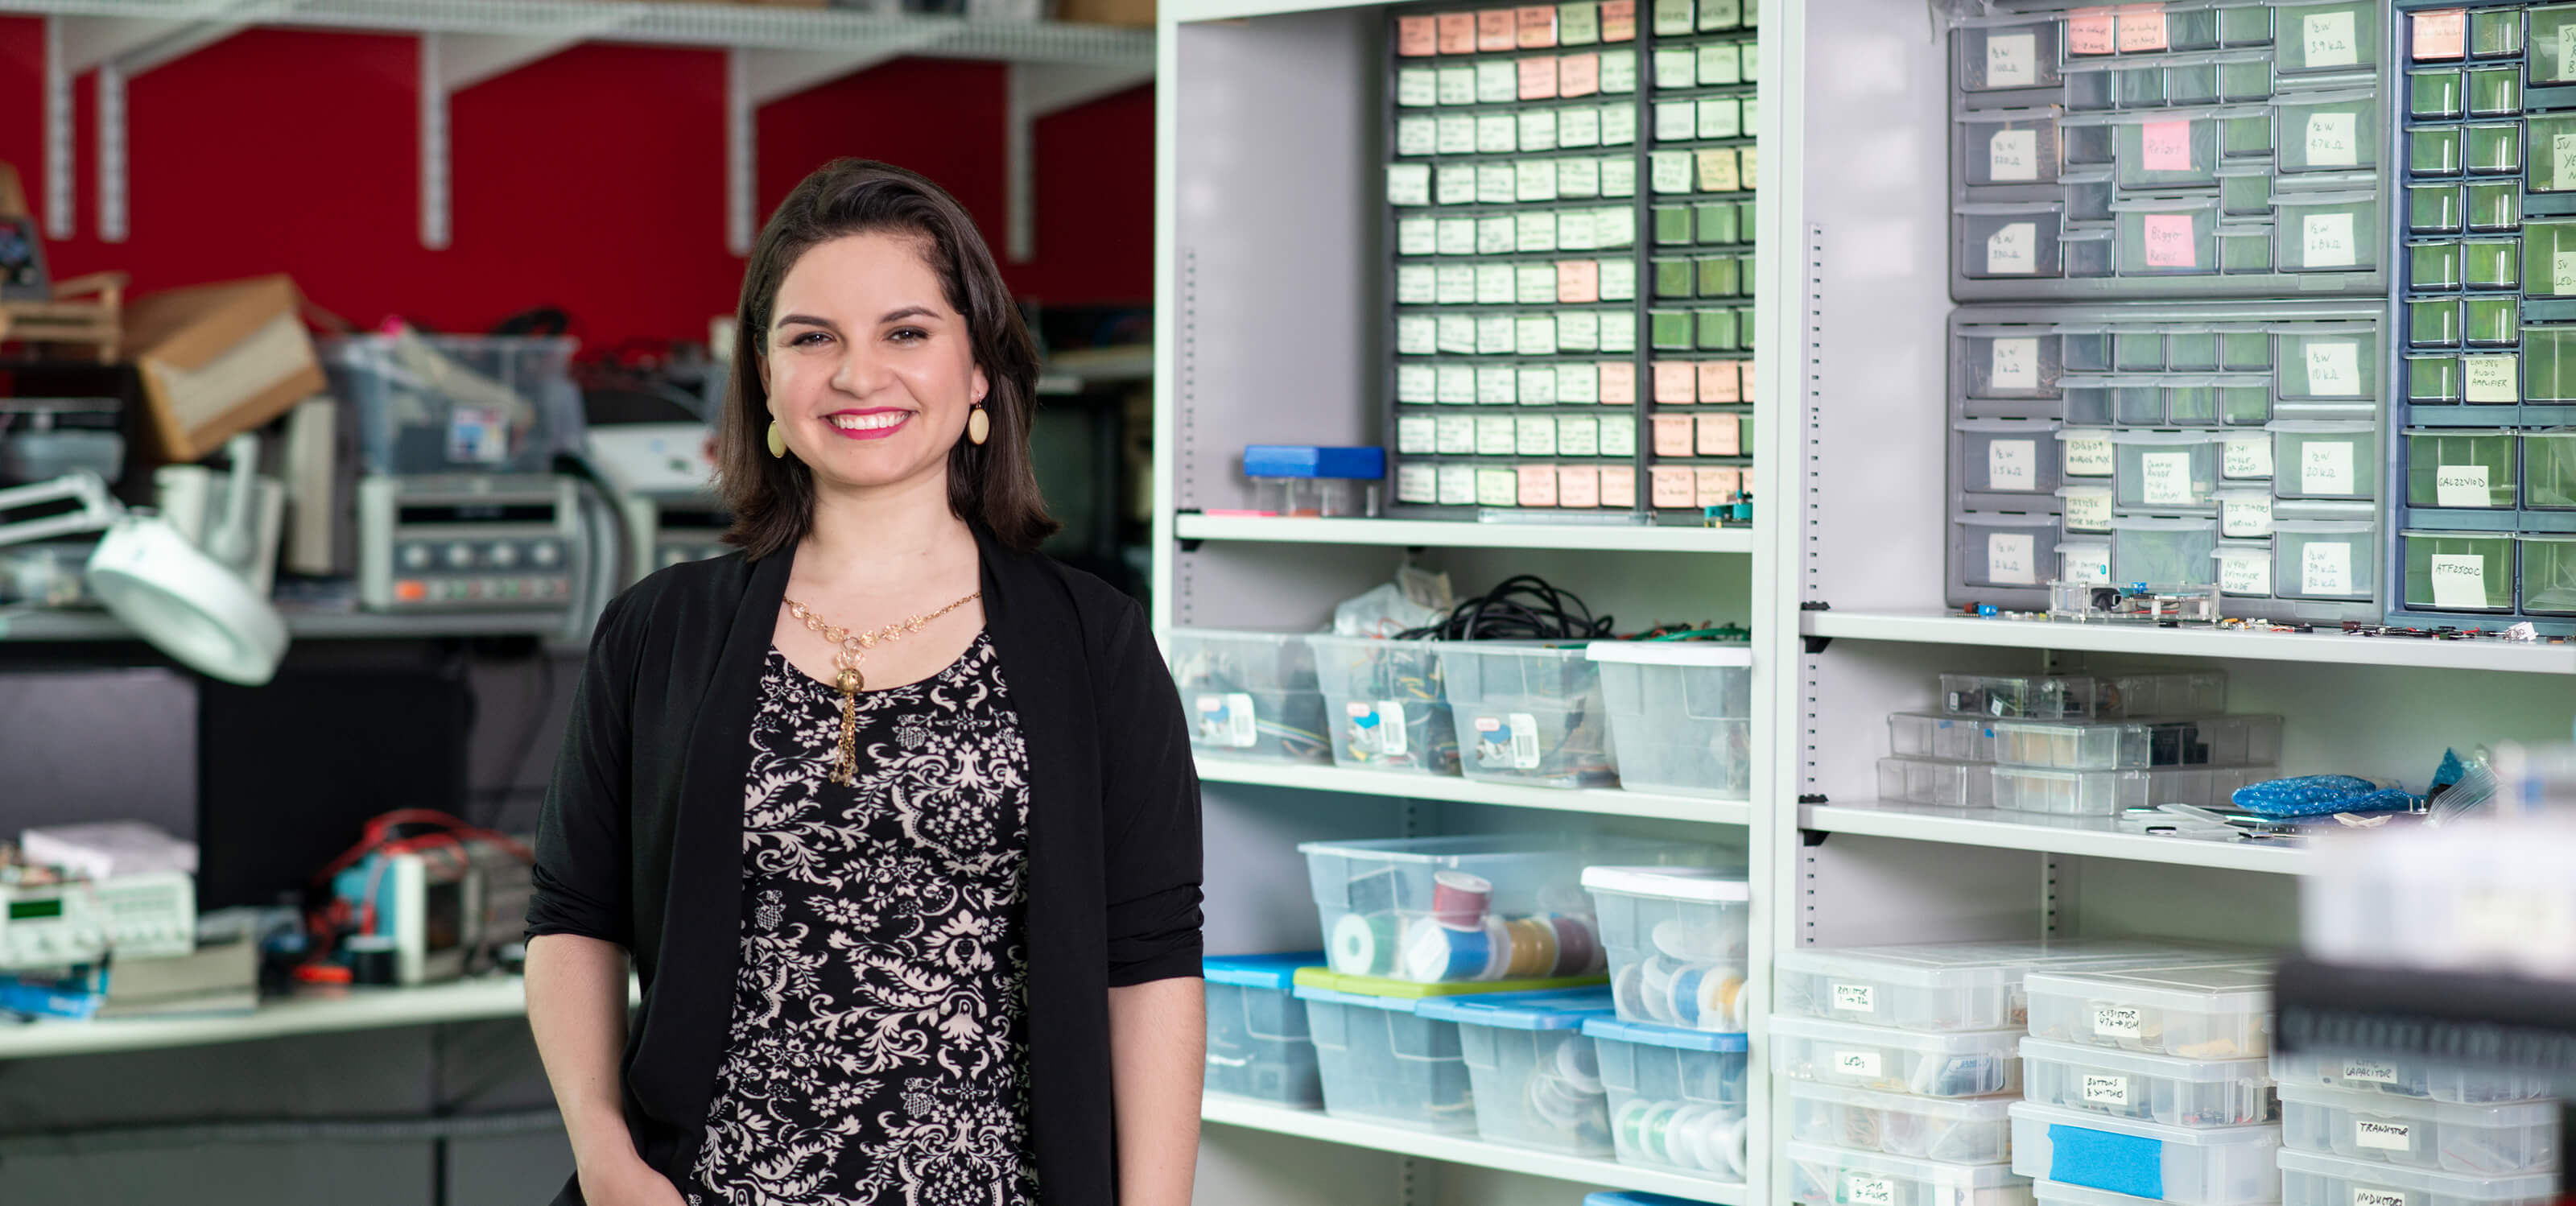 DigiPen professor Lorena Villarreal stands smiling in a DigiPen lab